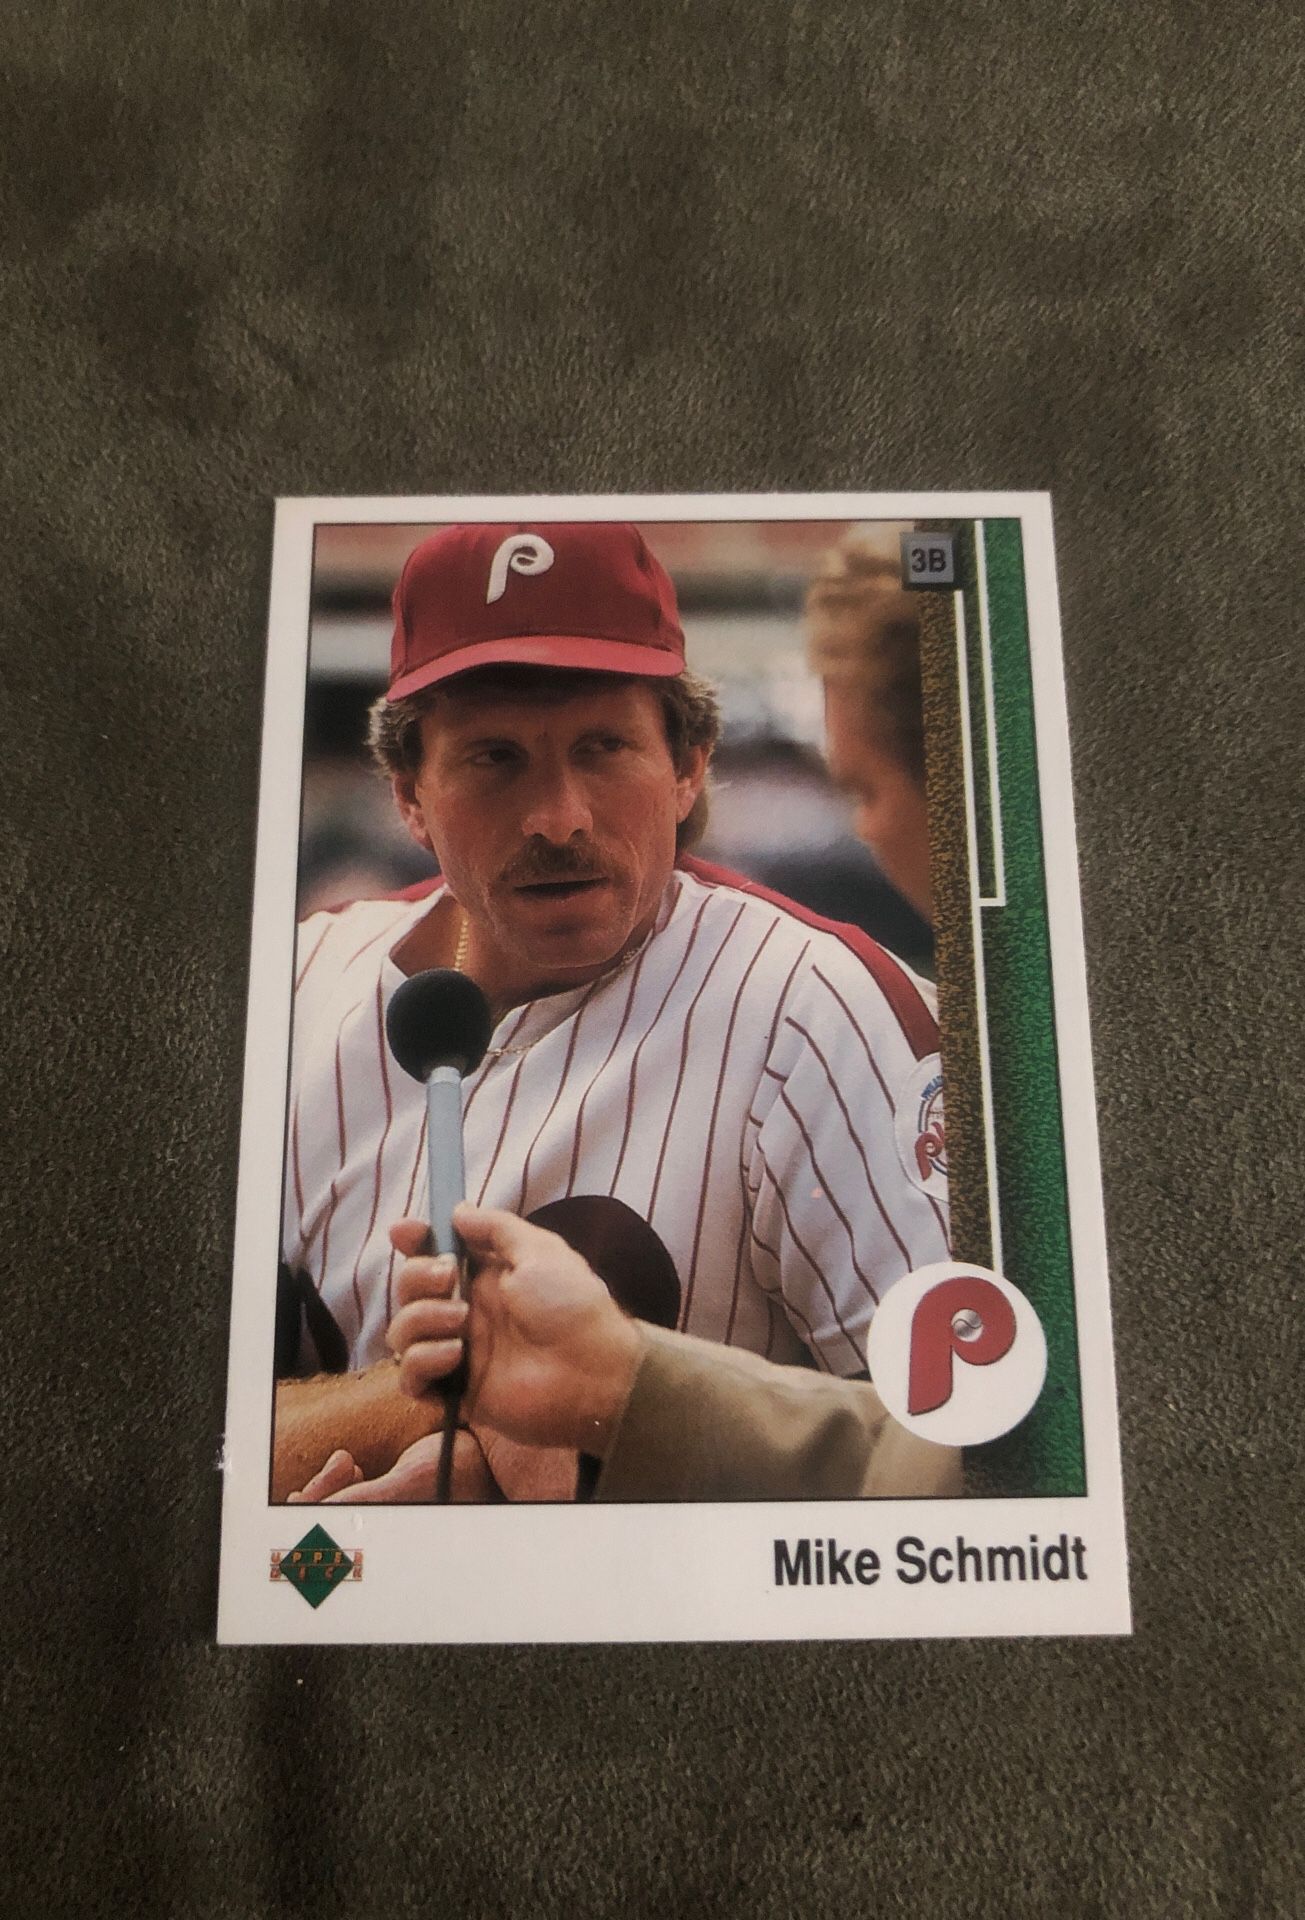 1989 Mike Schmidt Upper deck Baseball Card Philadelphia Phillies